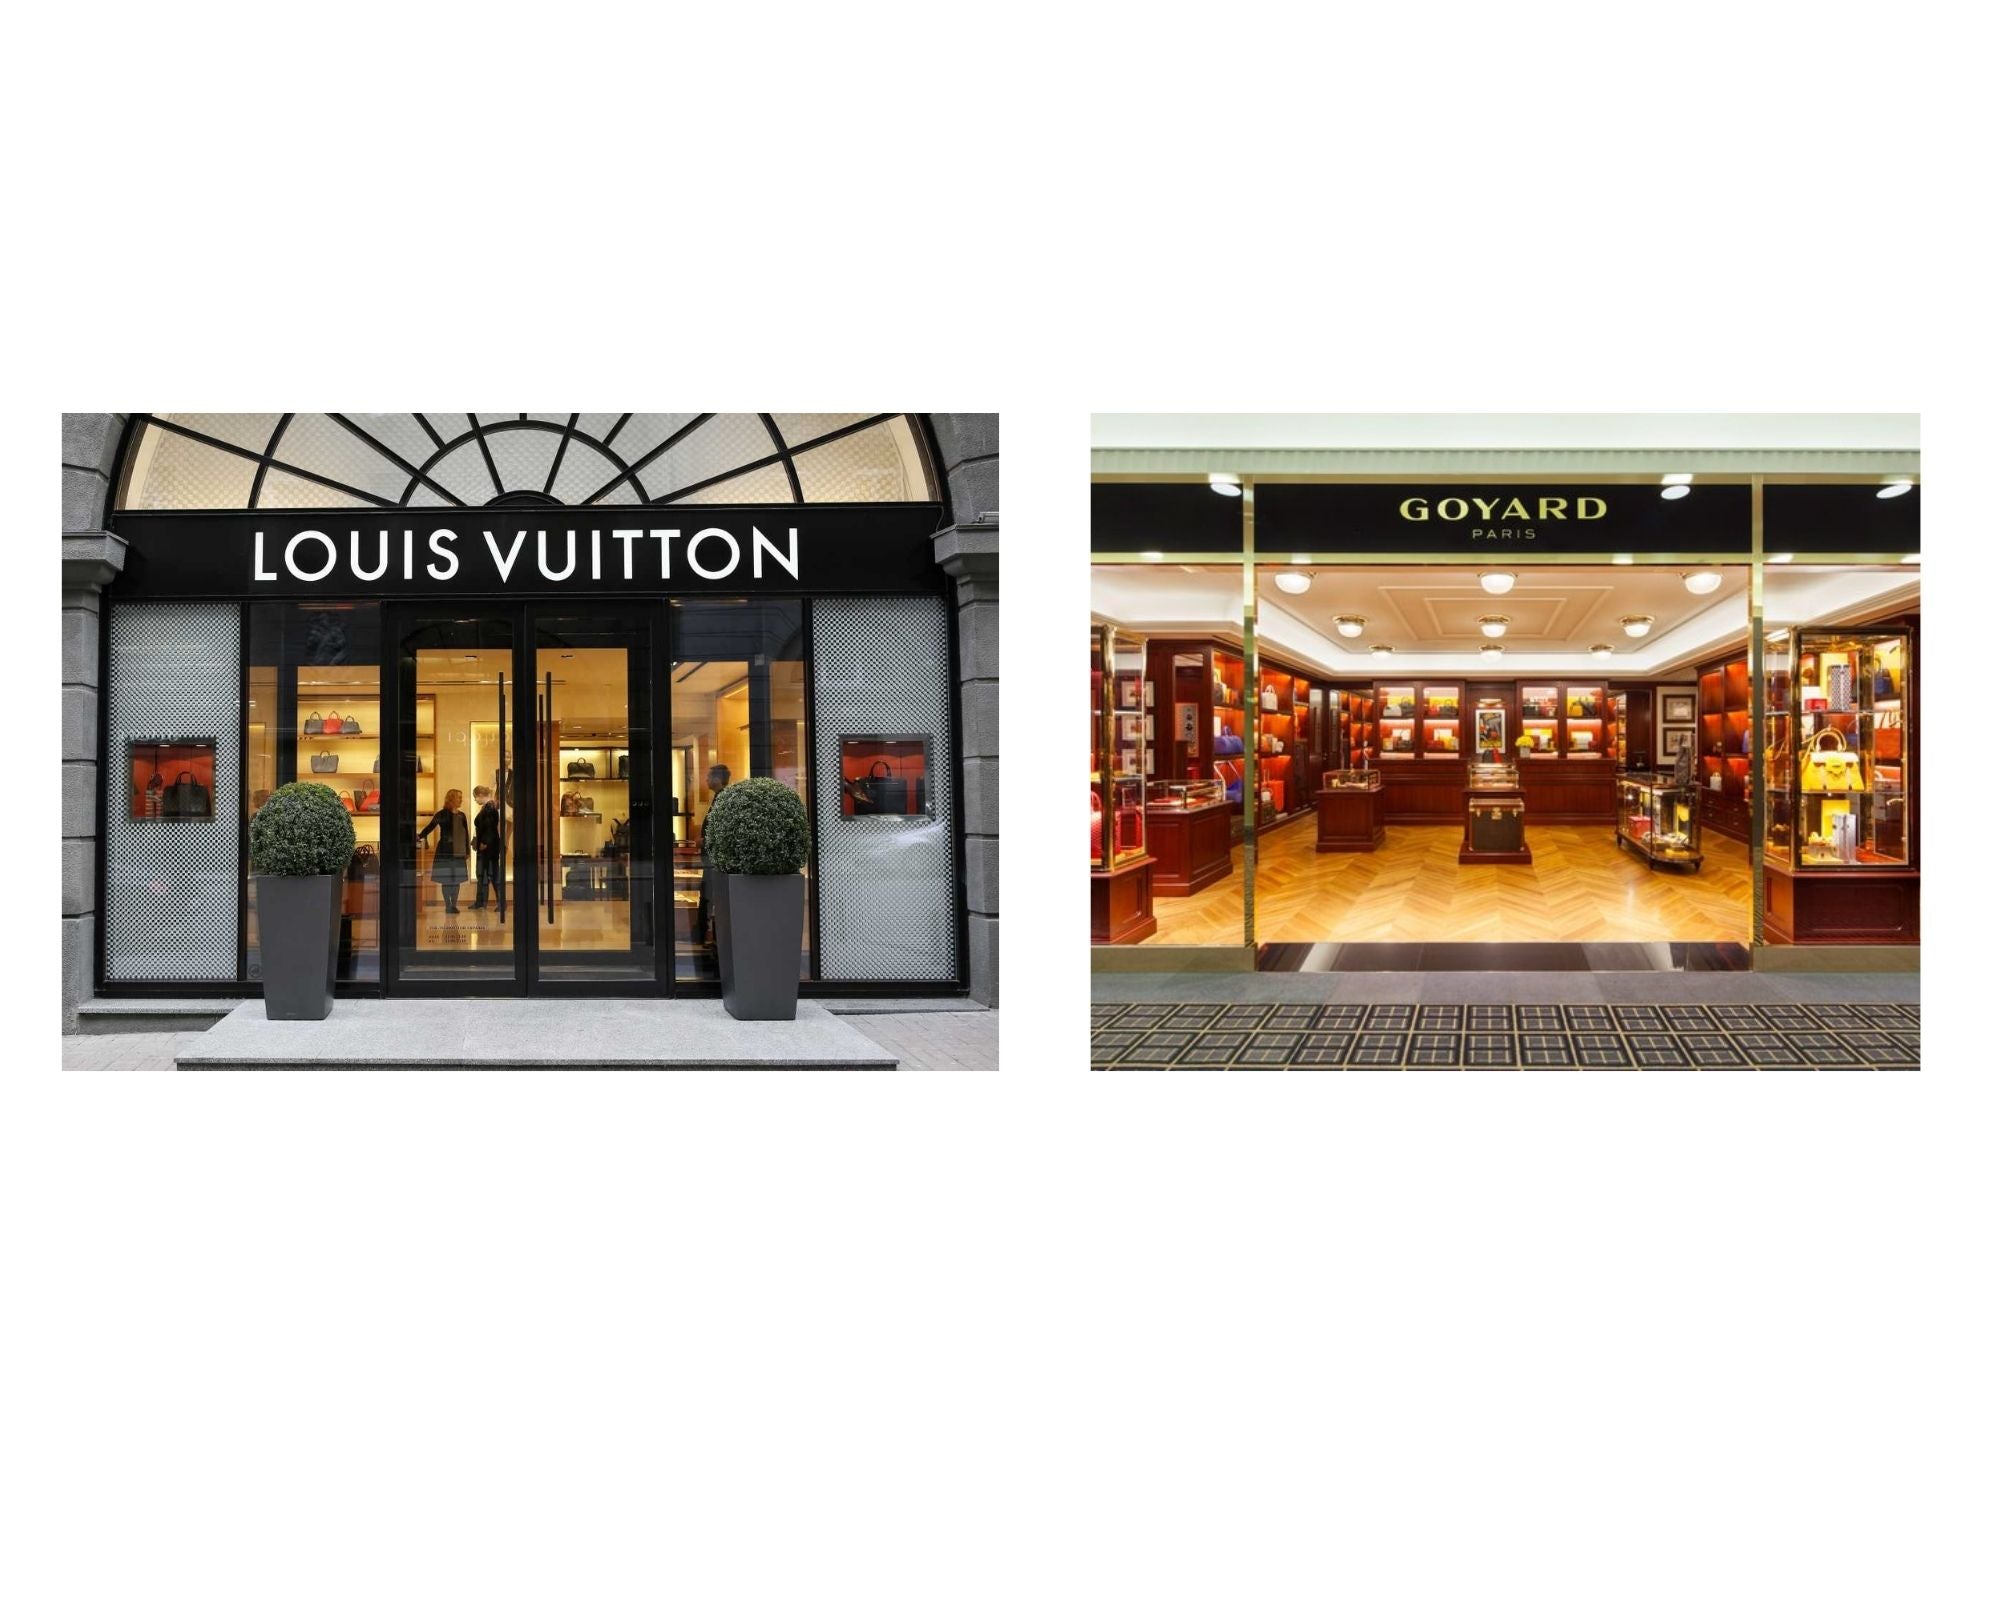 Which Brand is Better: Louis Vuitton vs Goyard